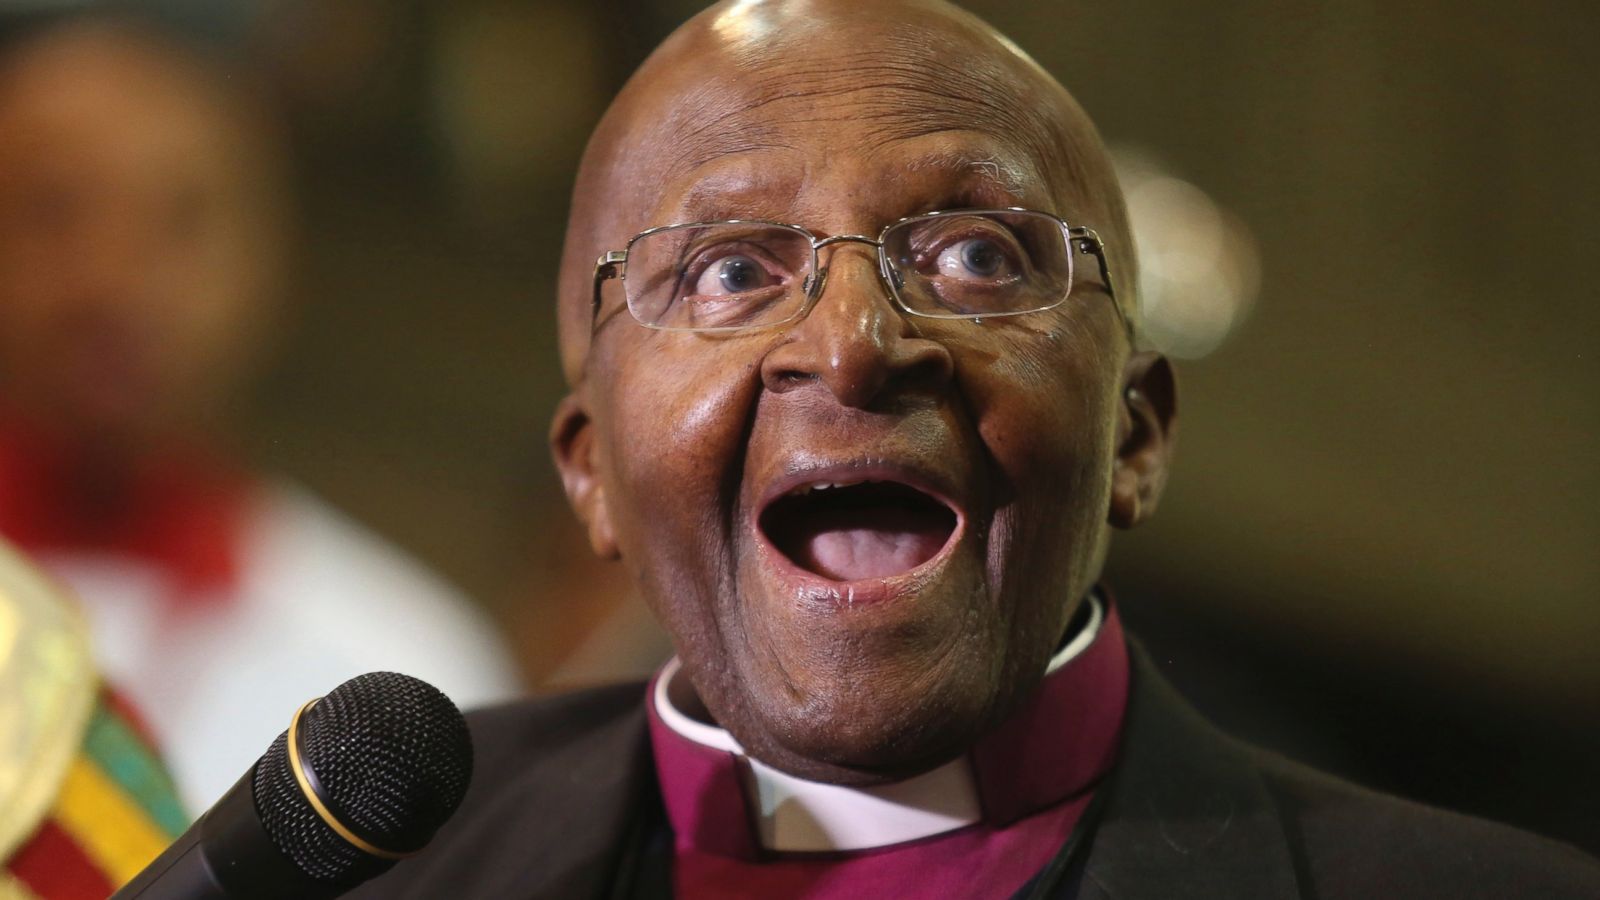 South African Archbishop Desmond Tutu Back in Hospital